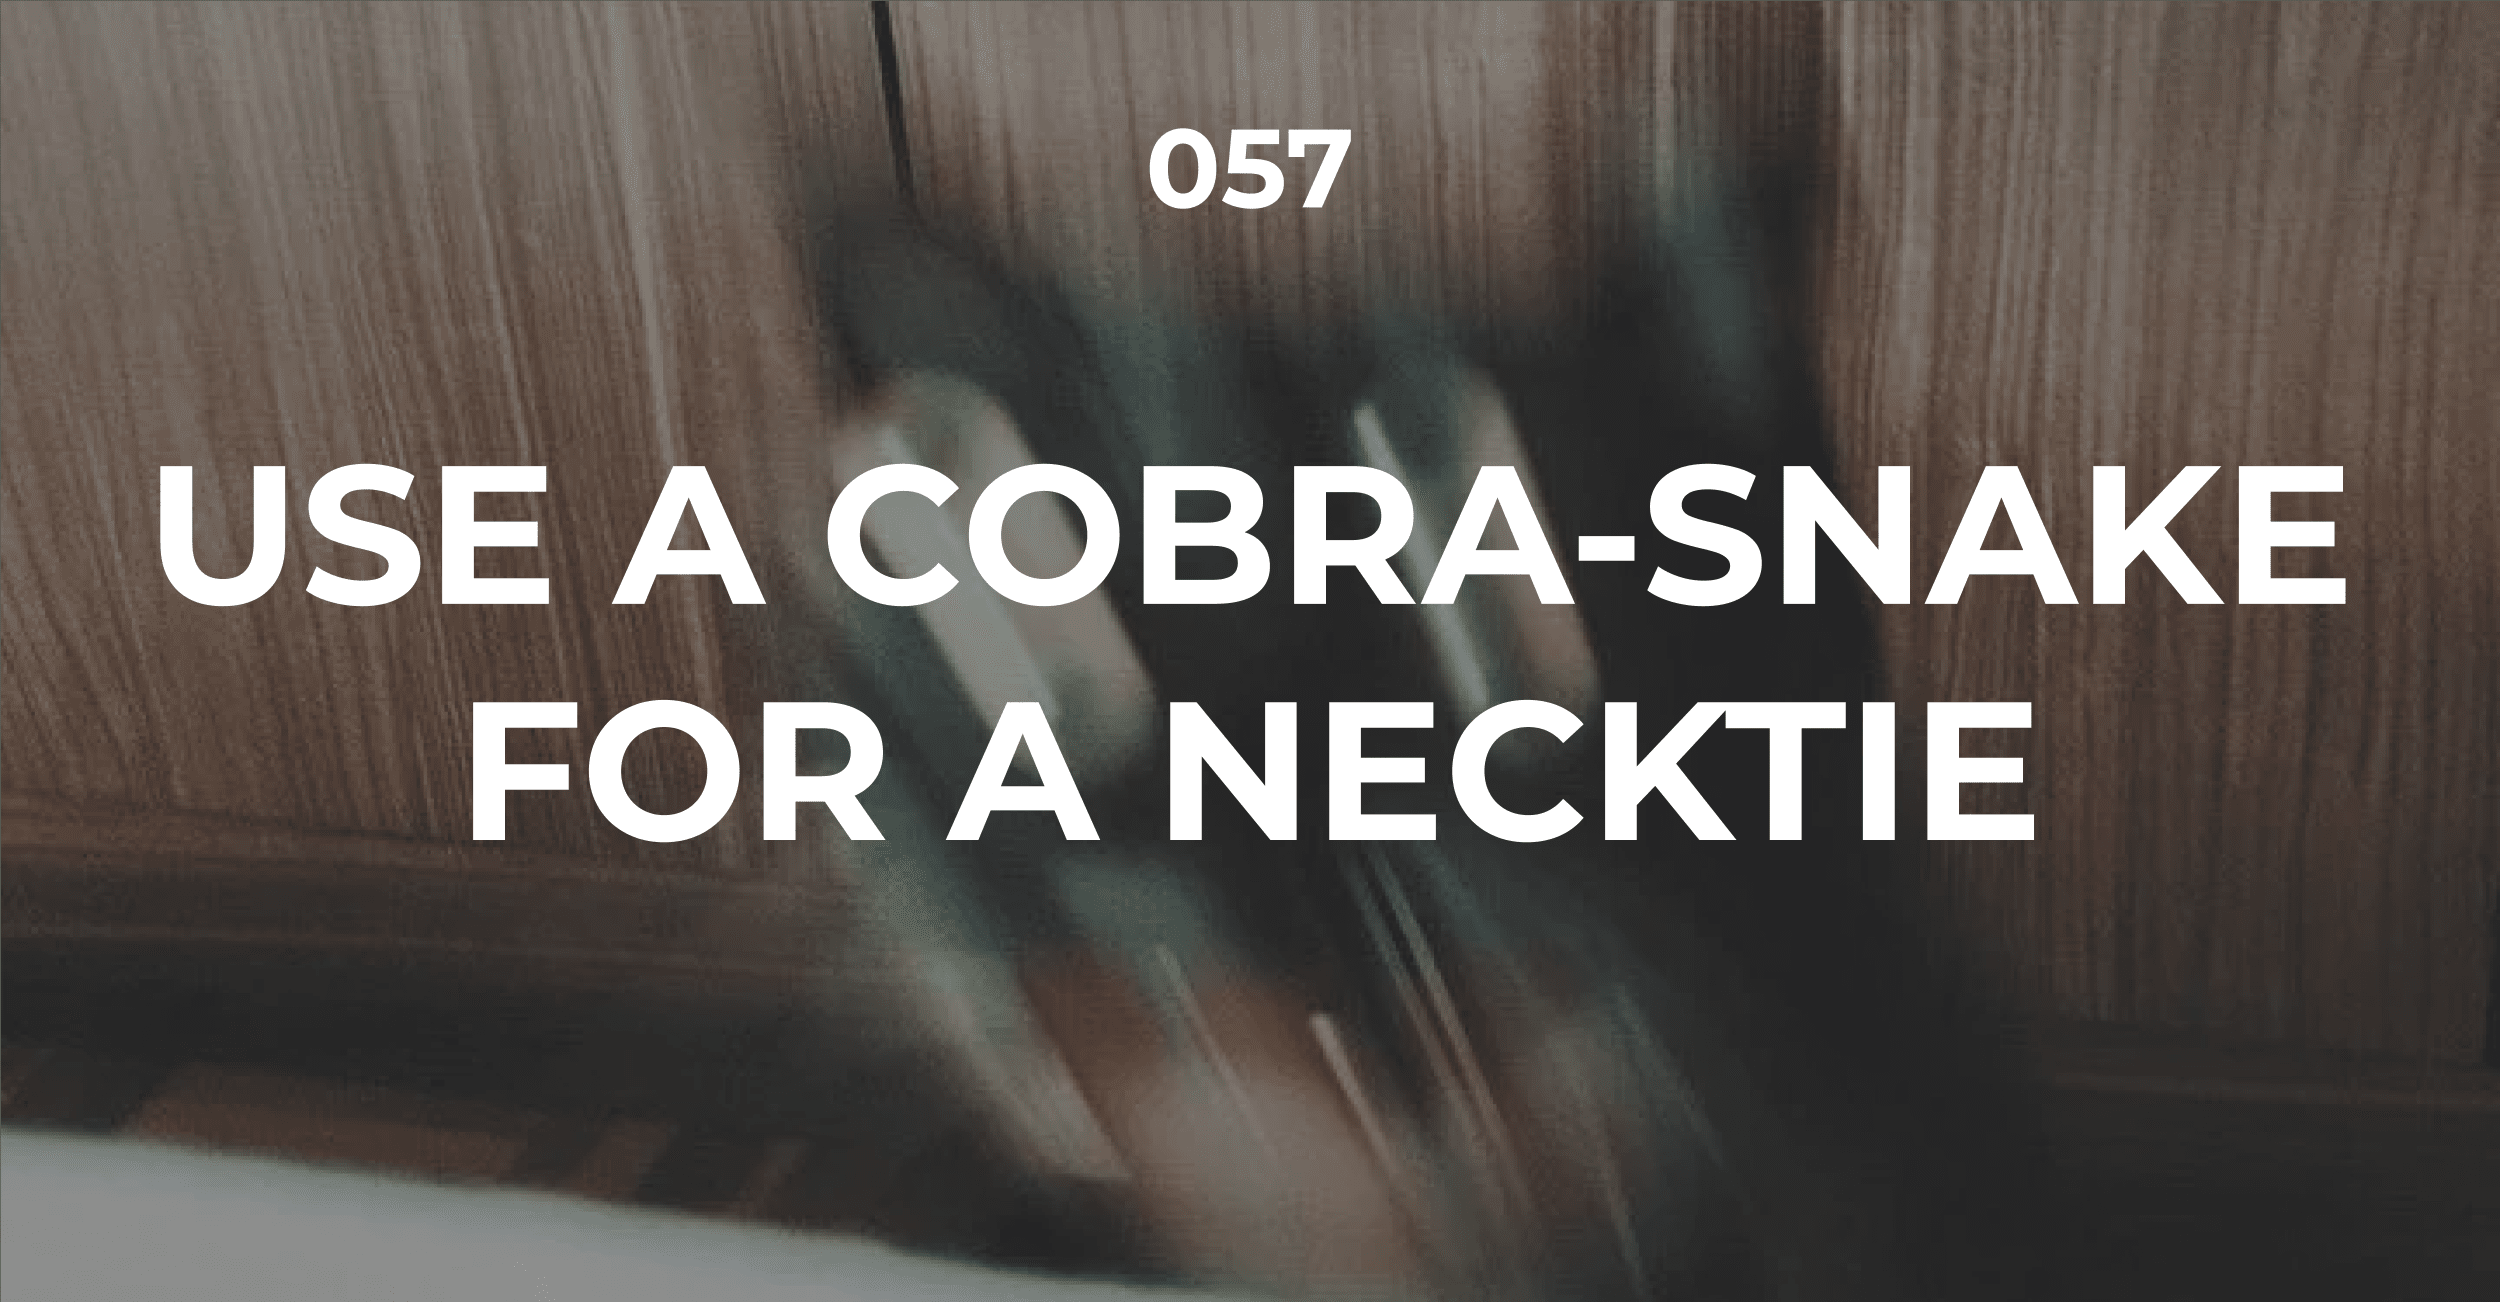 Use a cobra-snake for a necktie